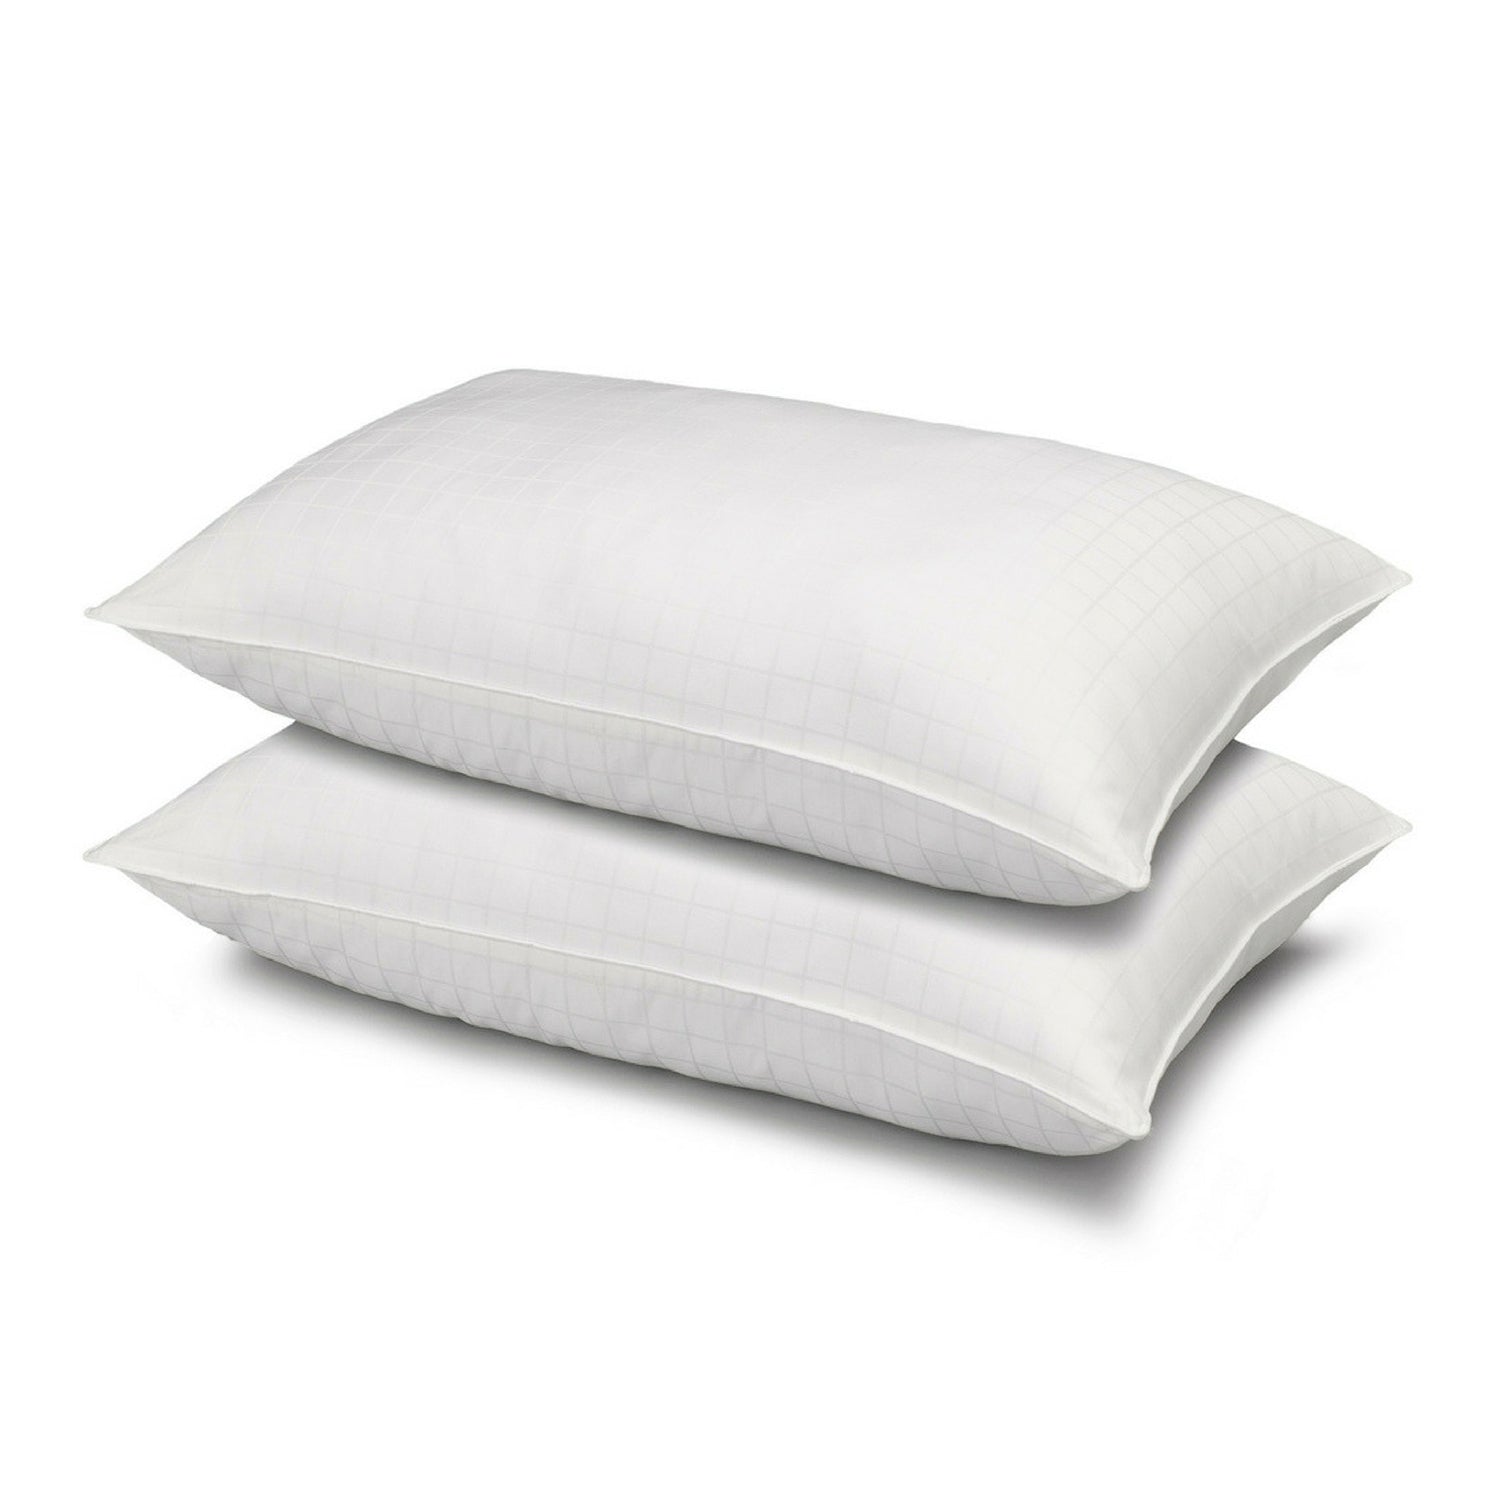 Overstuffed Gel Filled 100% Cotton Dobby-Box Shell Side/Back Sleeper Pillow